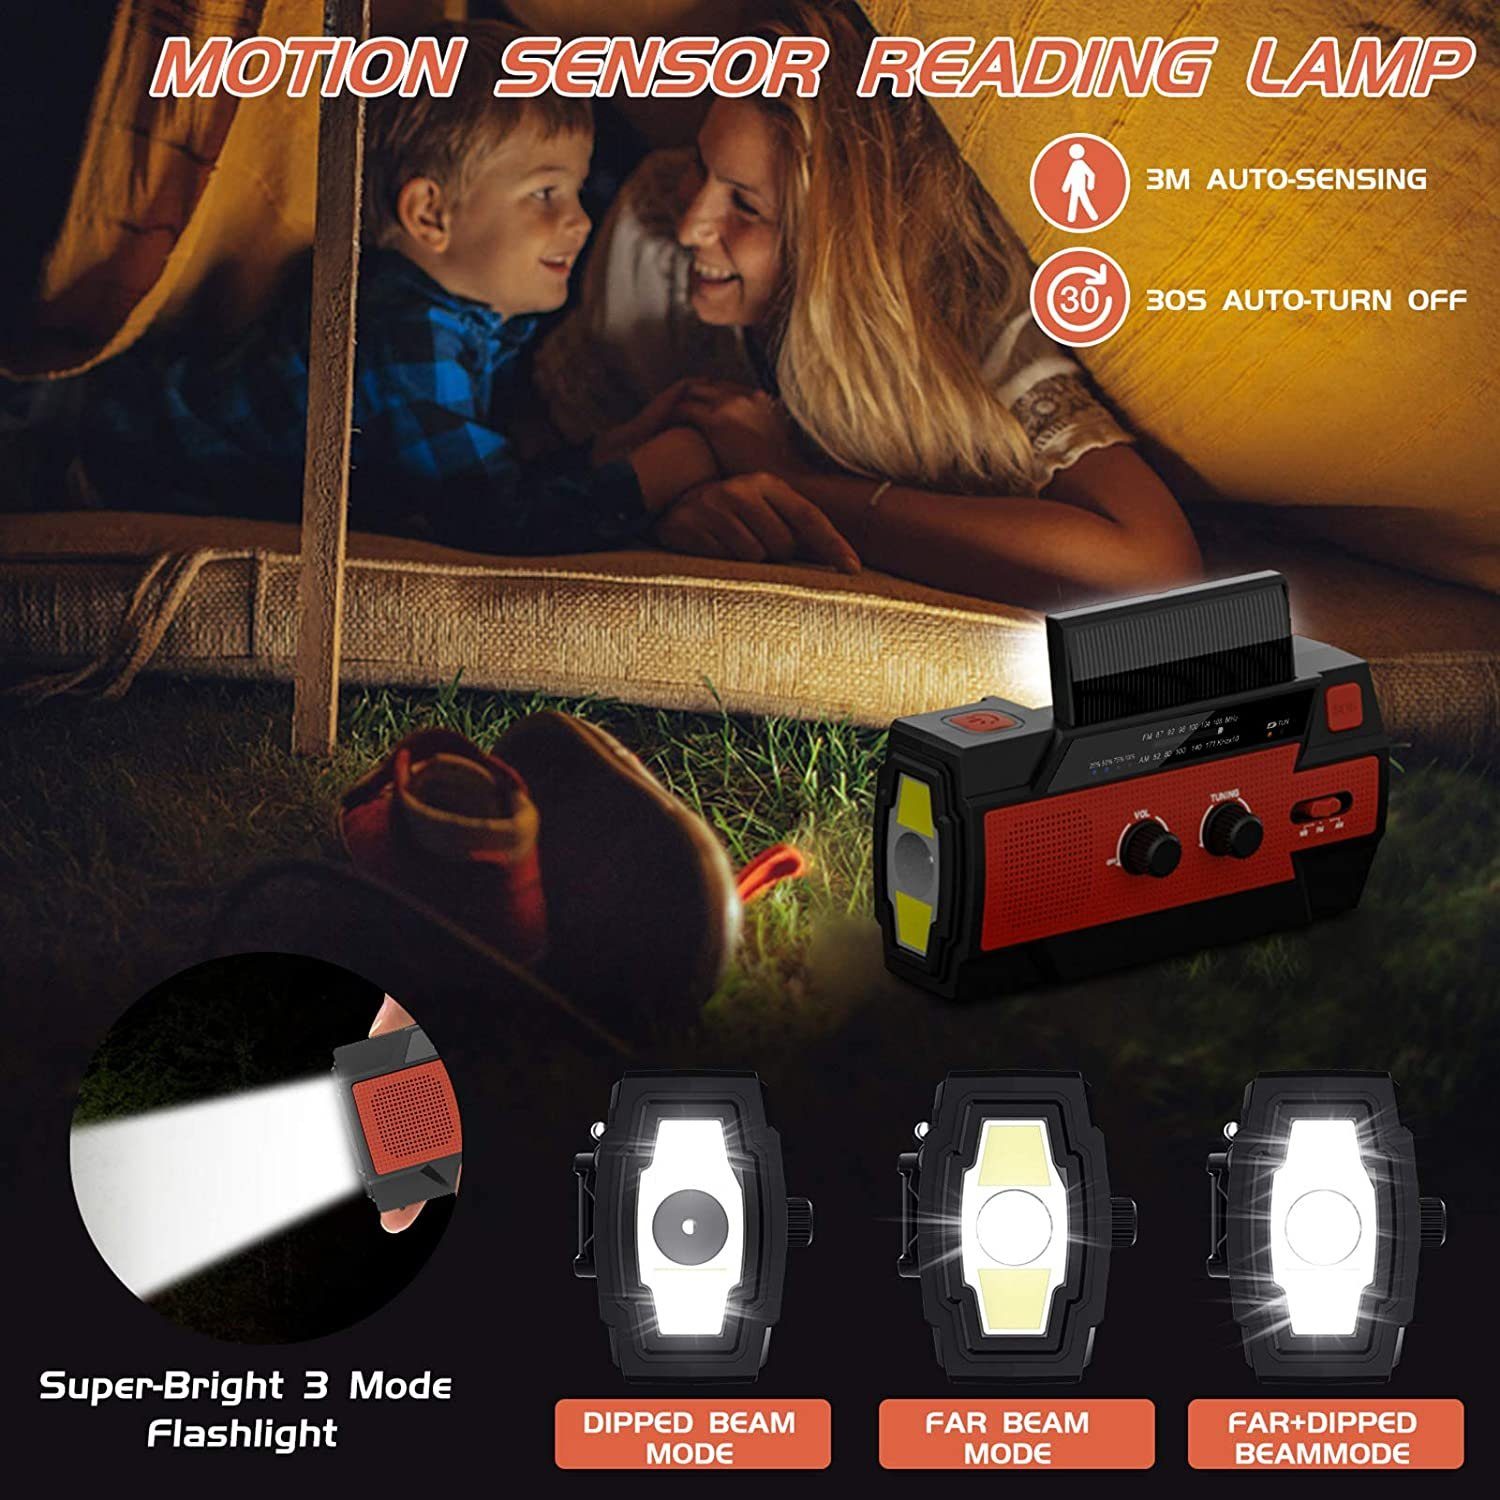 Camping und Digitalradio für 4 4000mAh (Digitalradio Modi (DAB) autolock LED Batterie Taschenlampe Notfall) Notfallradio Mit Kurbelradio Solar Tragbar Rot SOS-Alarm (DAB), für Radio,AM/FM USB